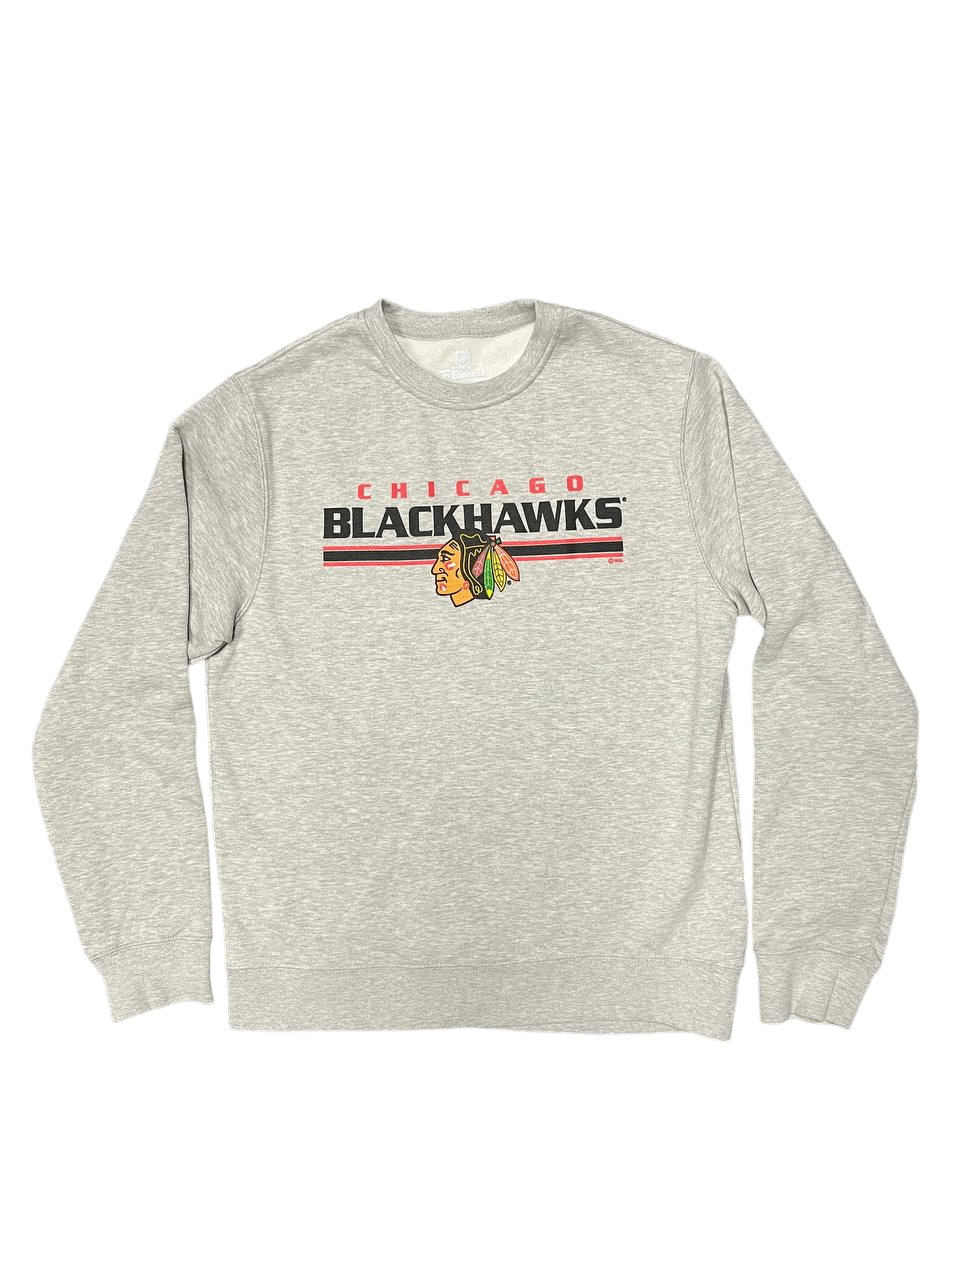 Chicago Blackhawks NHL Team Classic Crew-neck Sweater - Gray